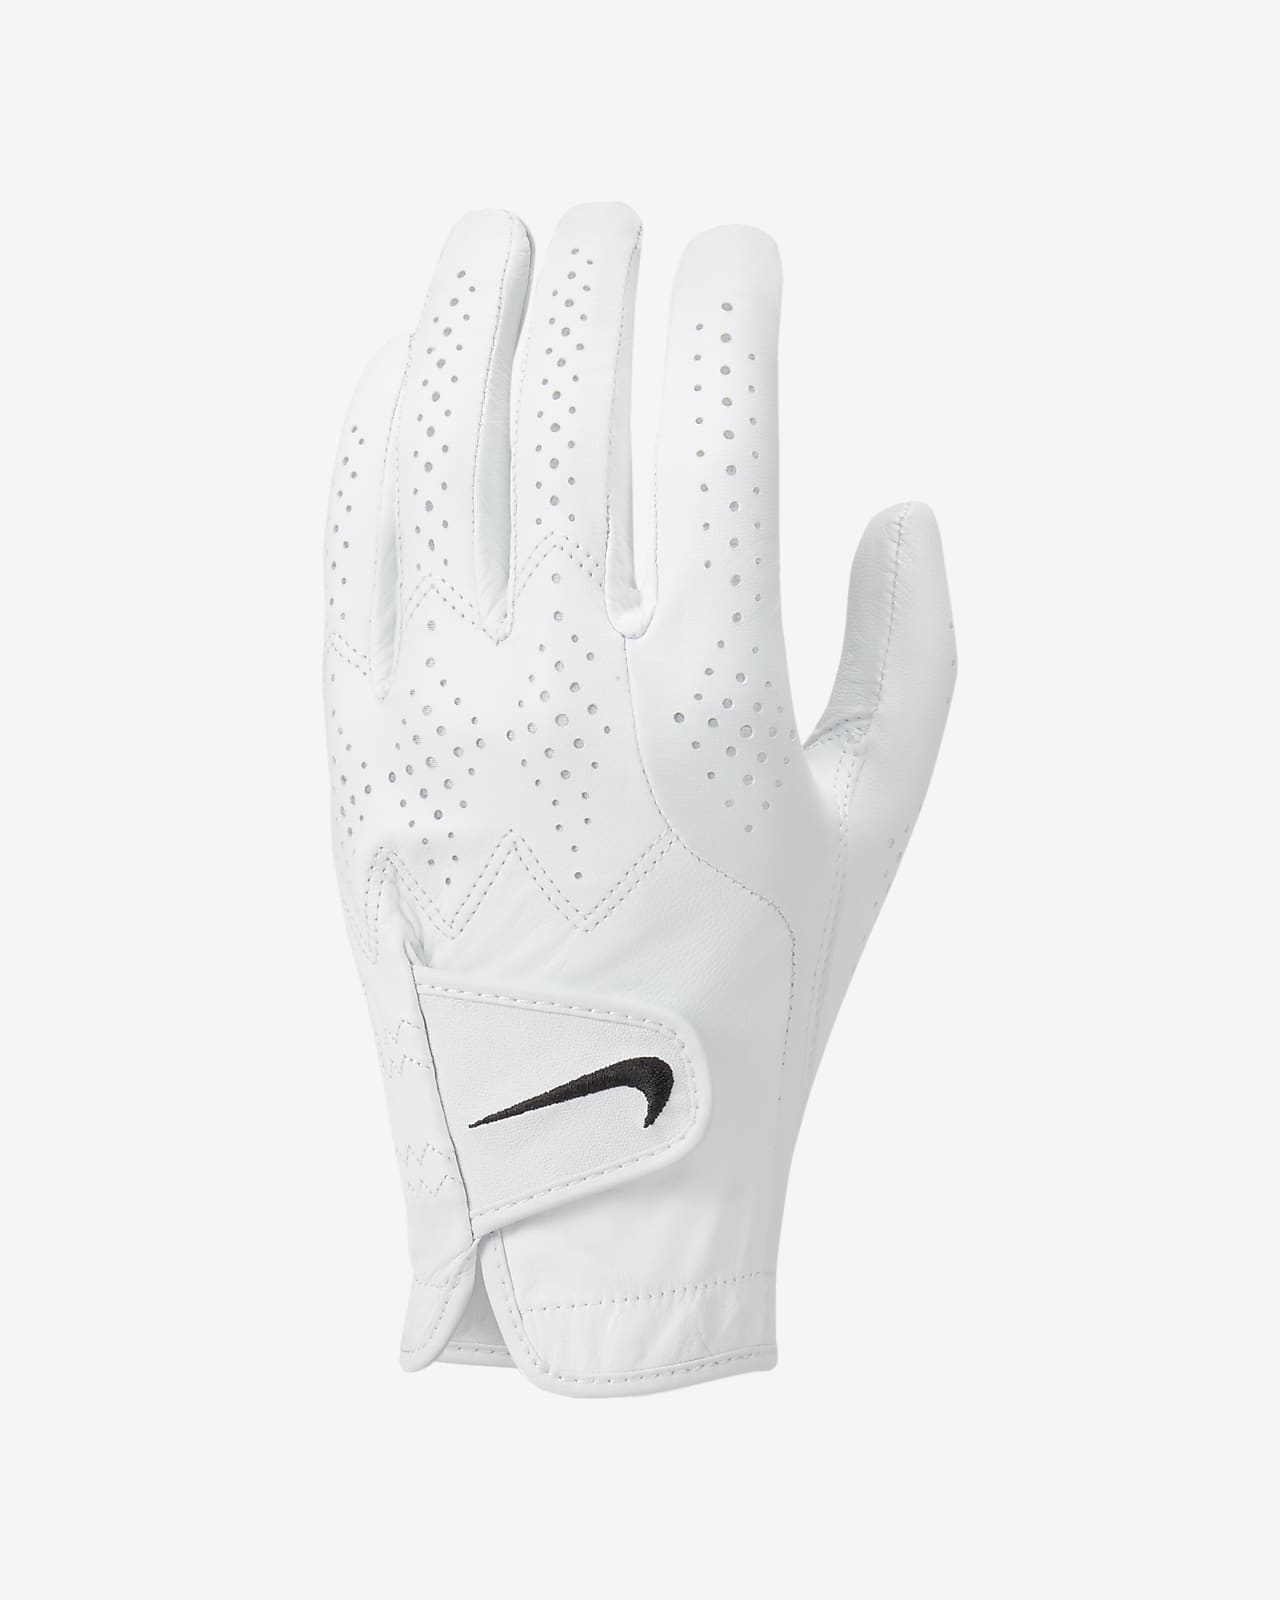 Nike Tour Classic 4 Golf Glove (Left Cadet)